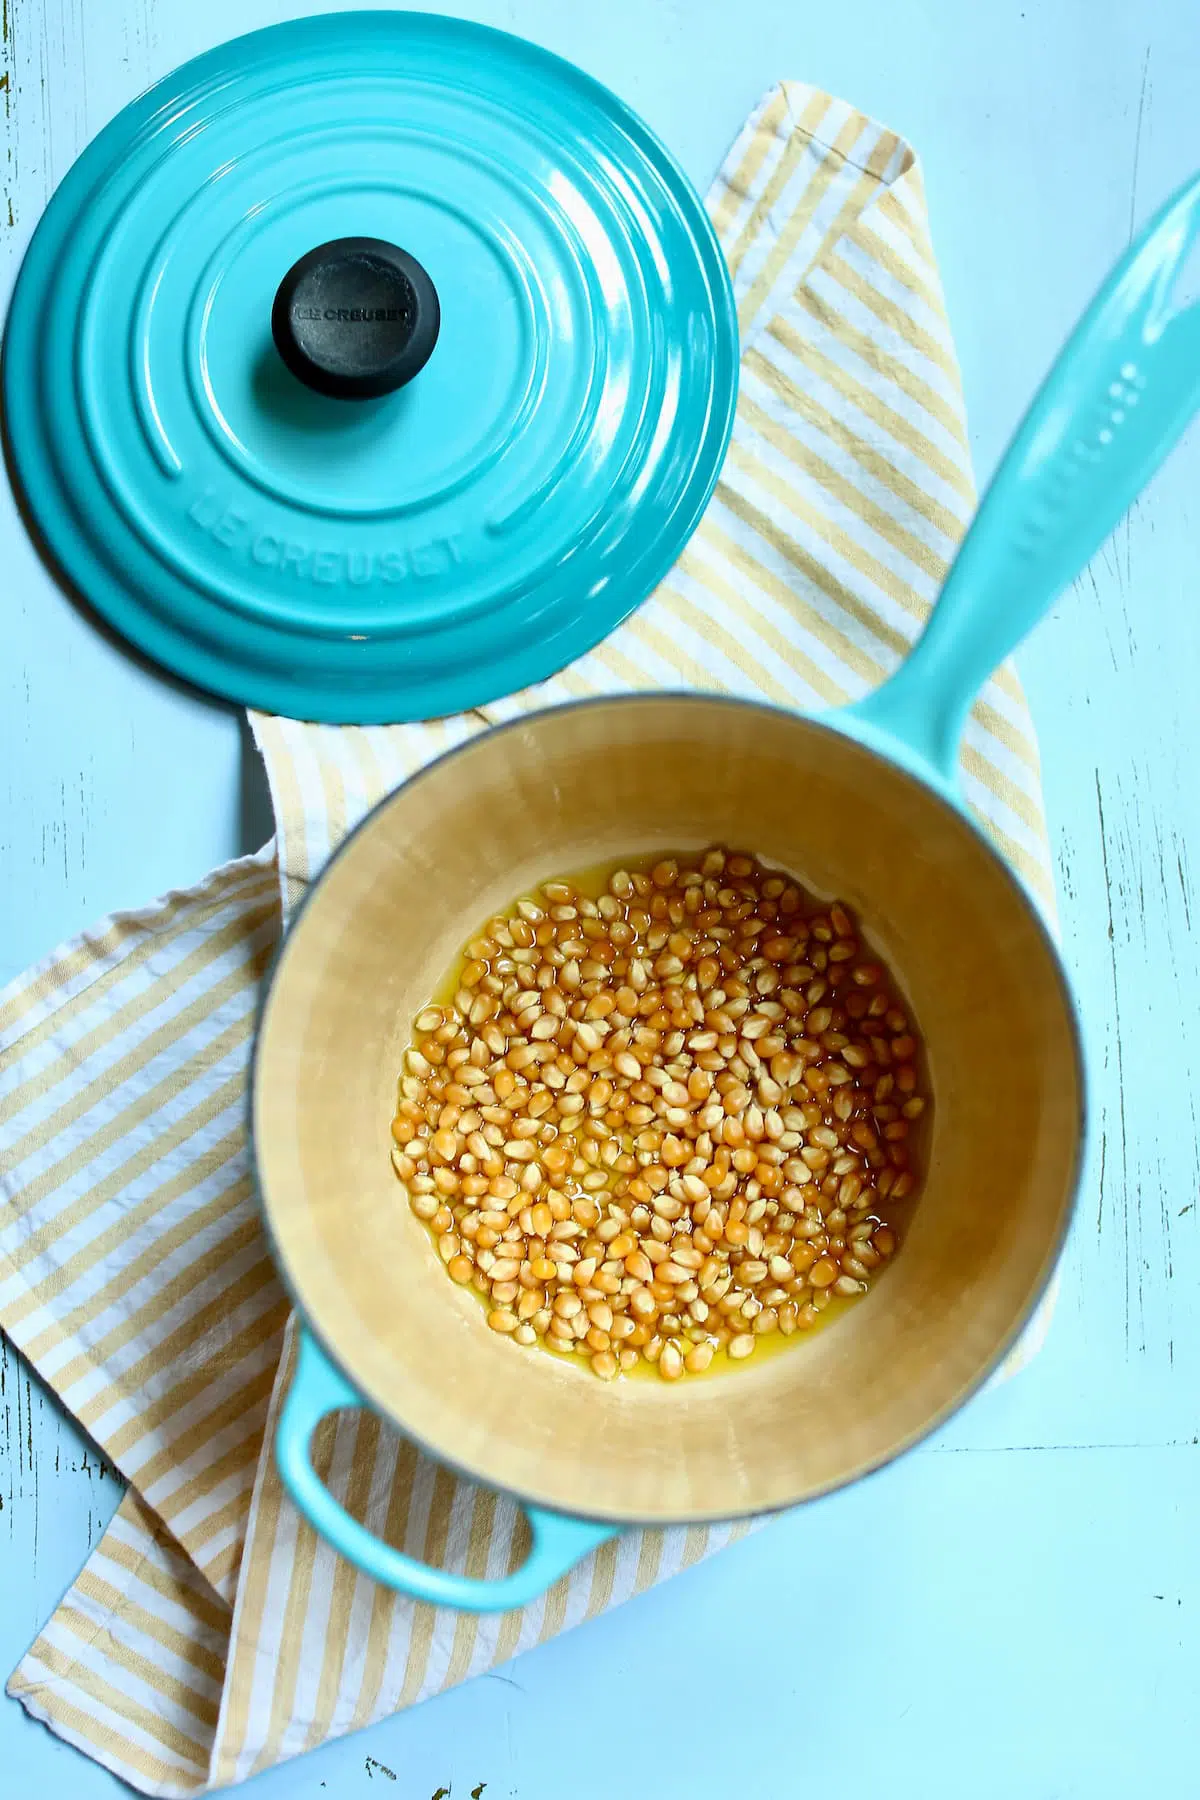 a blue saucepan of uncooked popcorn kernels.